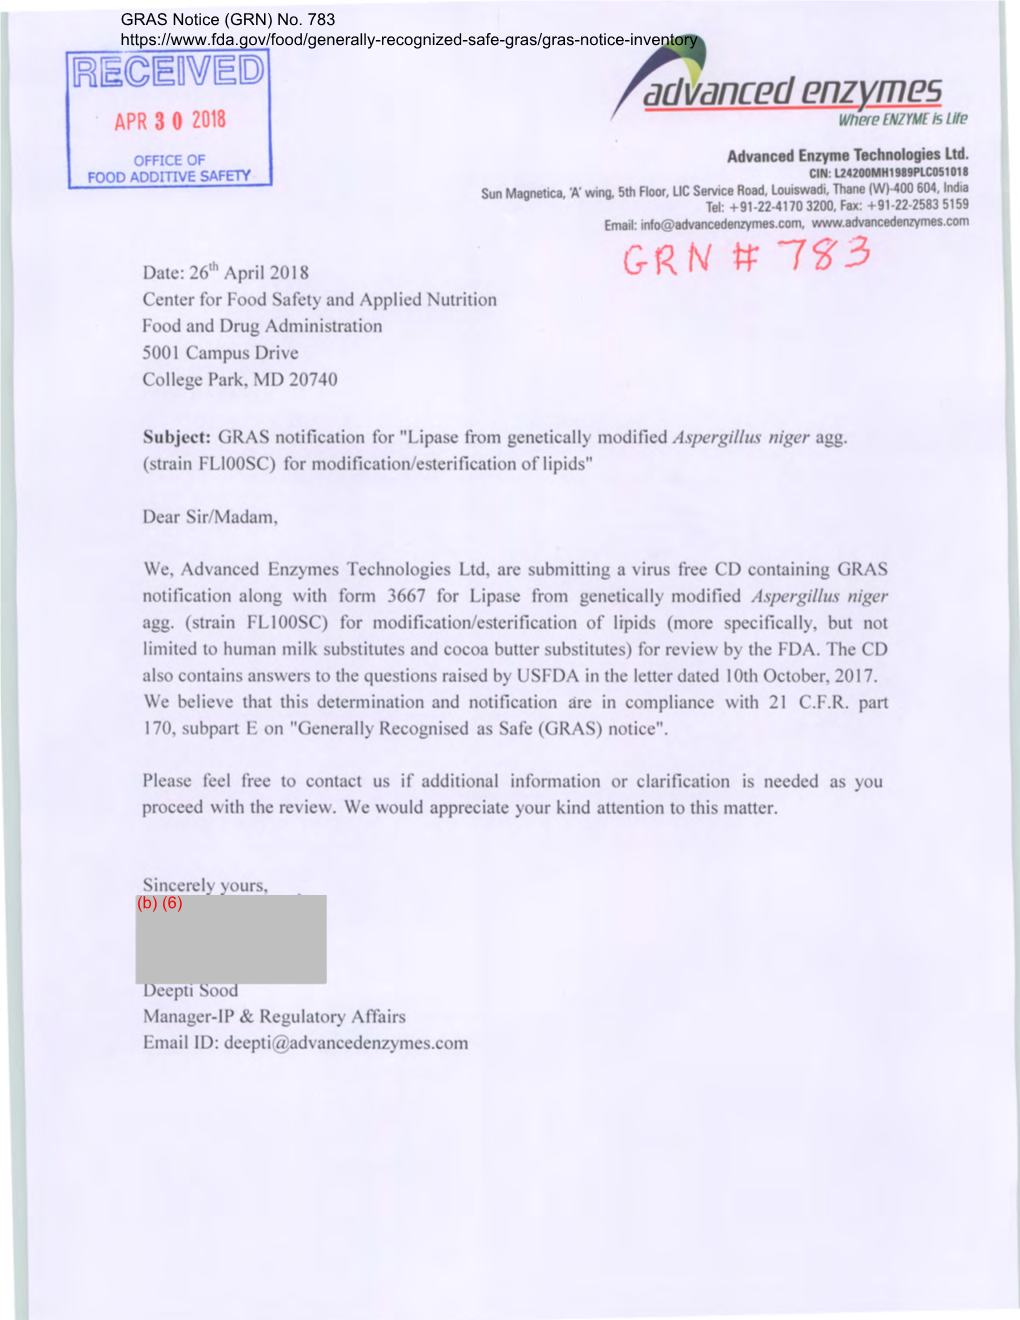 GRAS Notice 783 for Triacylglycerol Lipase from Rhizopus Oryzae Produced in Aspergillus Niger